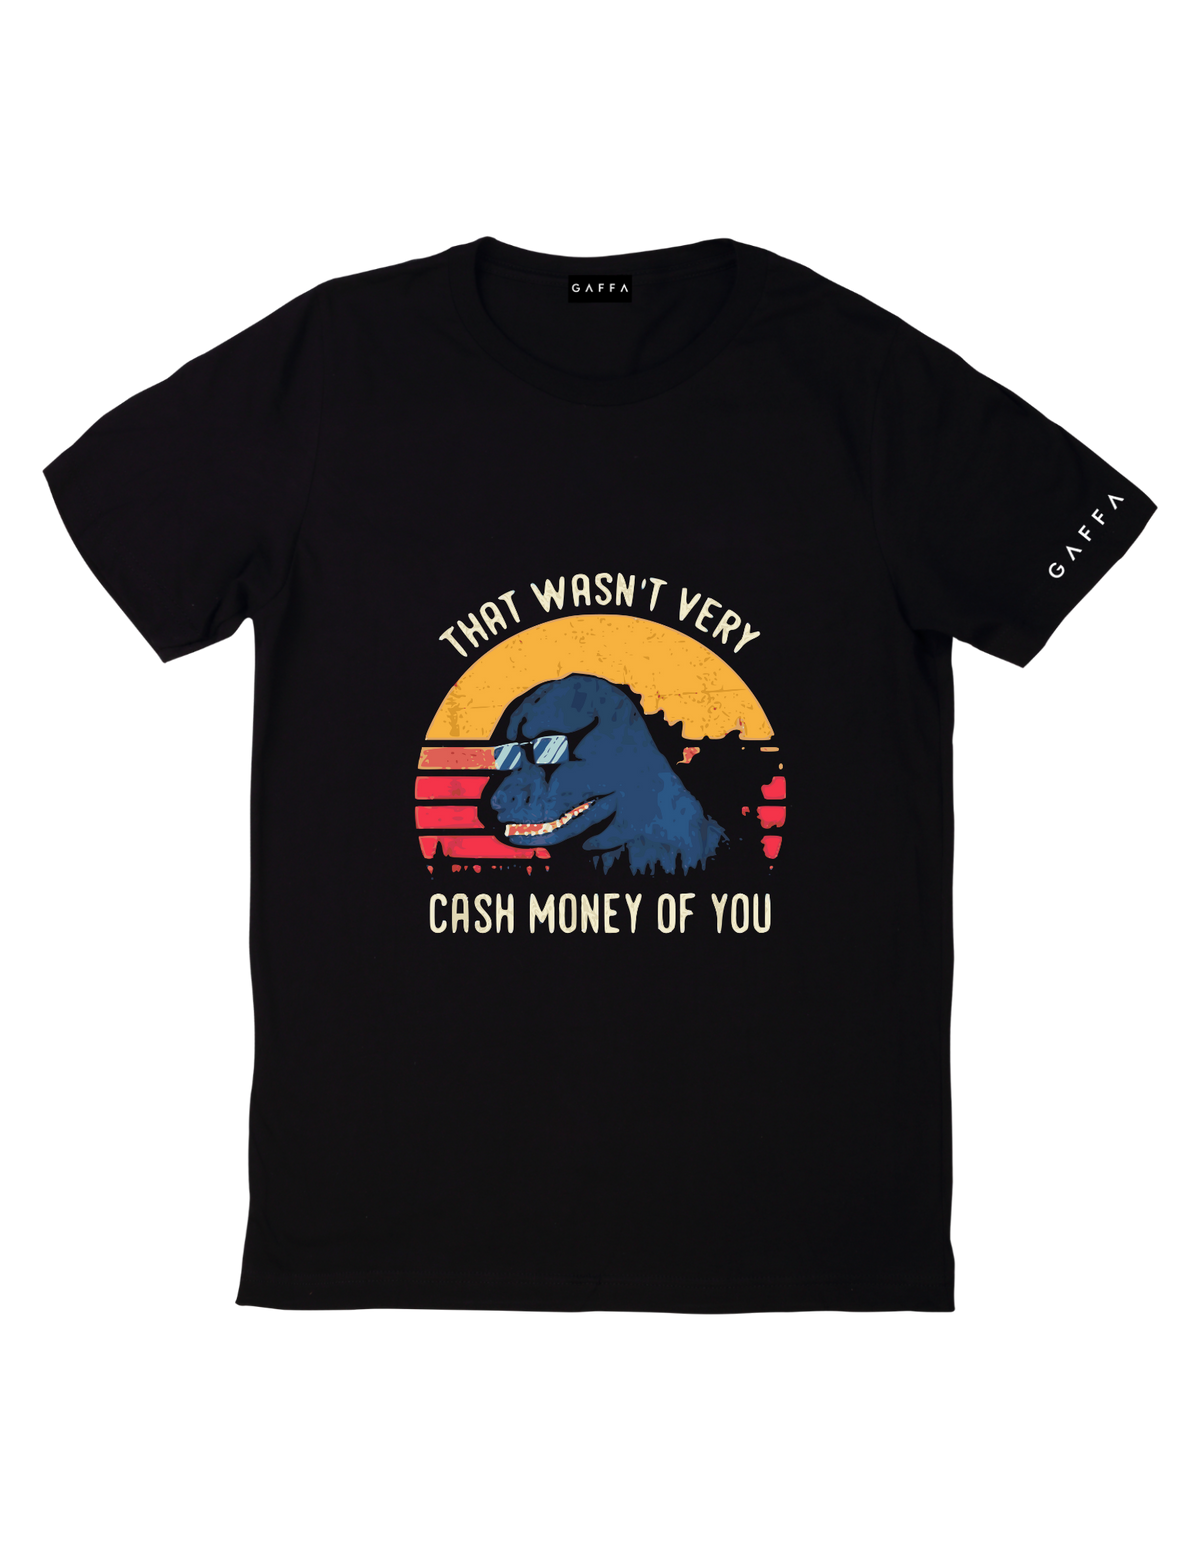 CASH MONEY